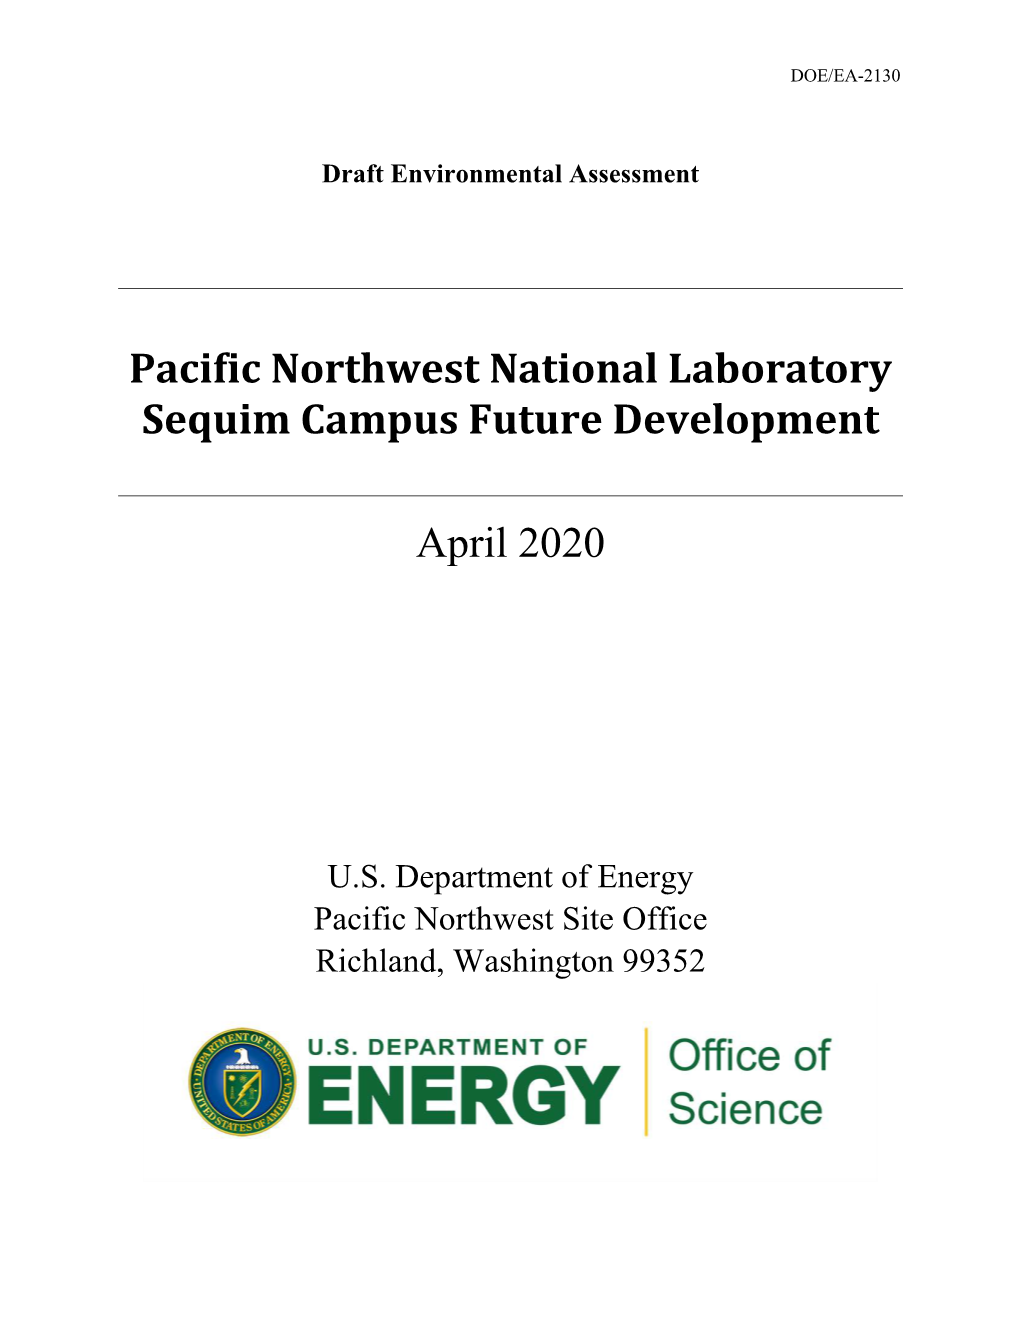 Pacific Northwest National Laboratory Sequim Campus Future Development